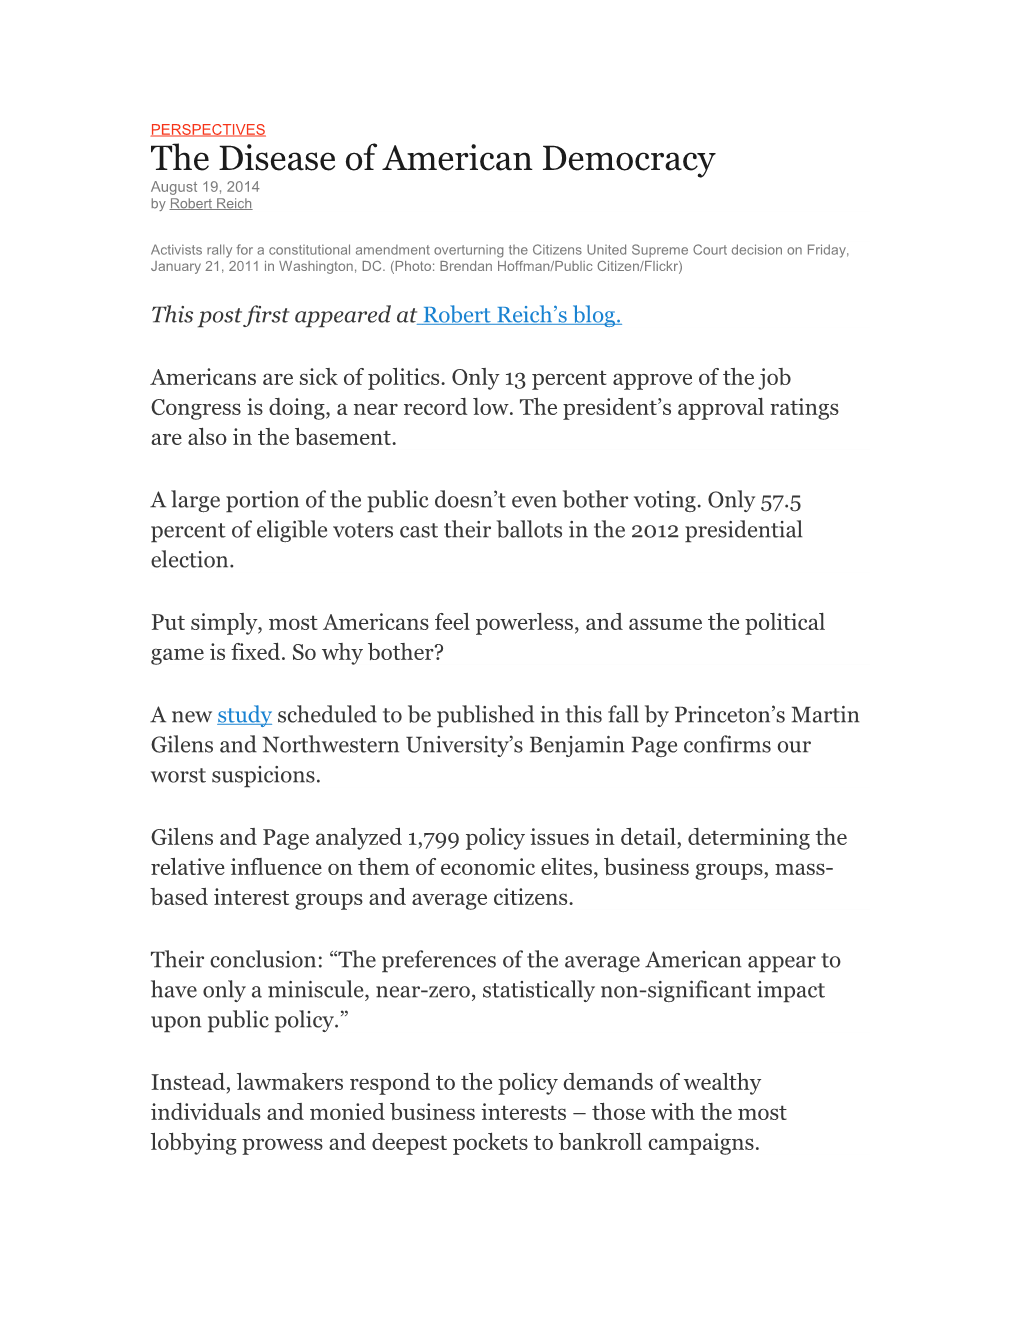 The Disease of American Democracy